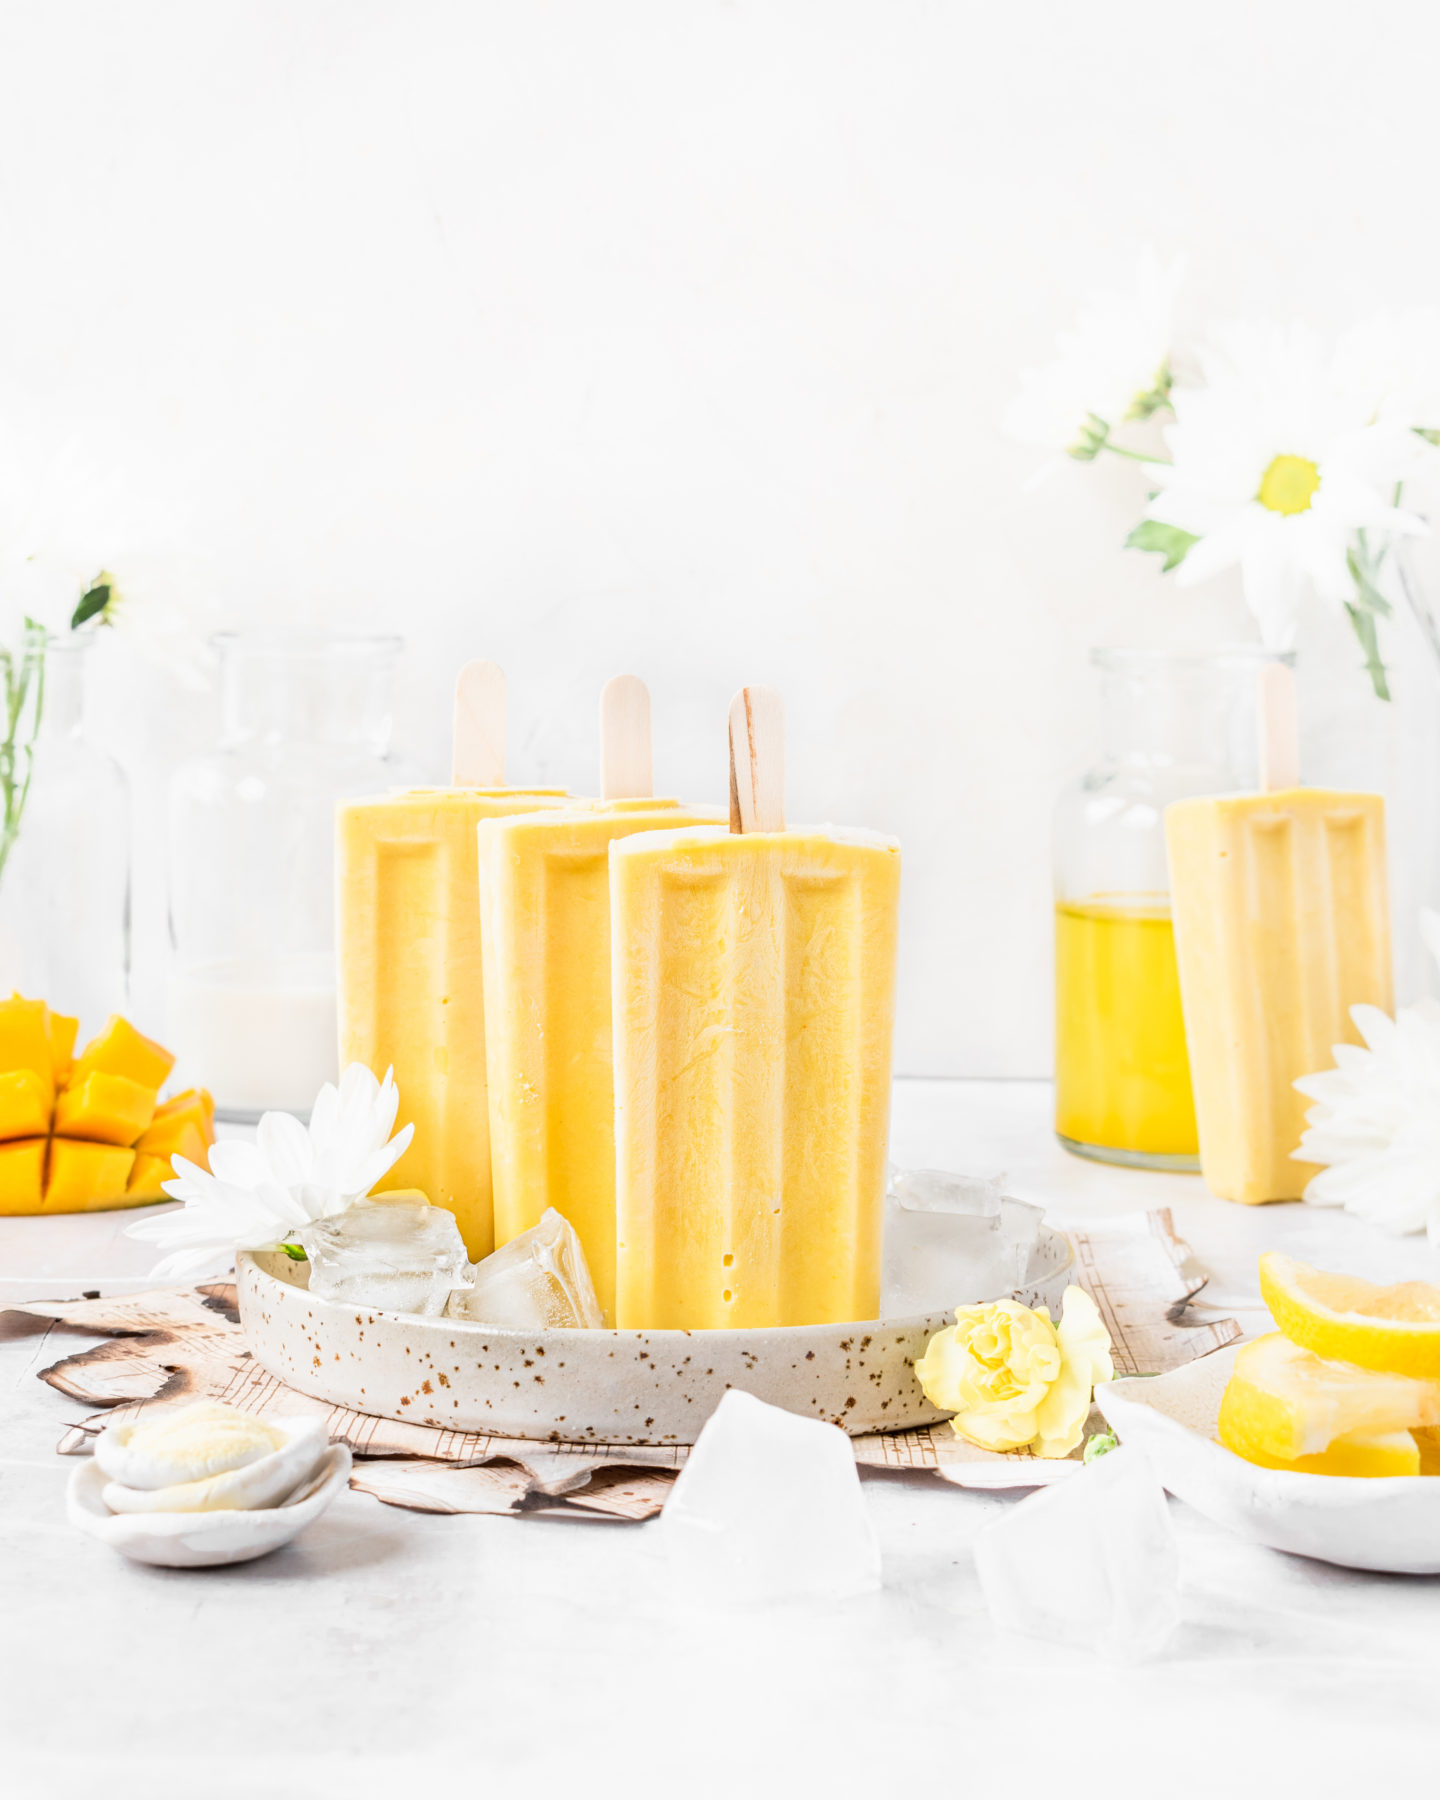 Creamy mango lemonade popsicles made with Botanica's Turmeric Lemonade powder. Refreshing, summer treat 